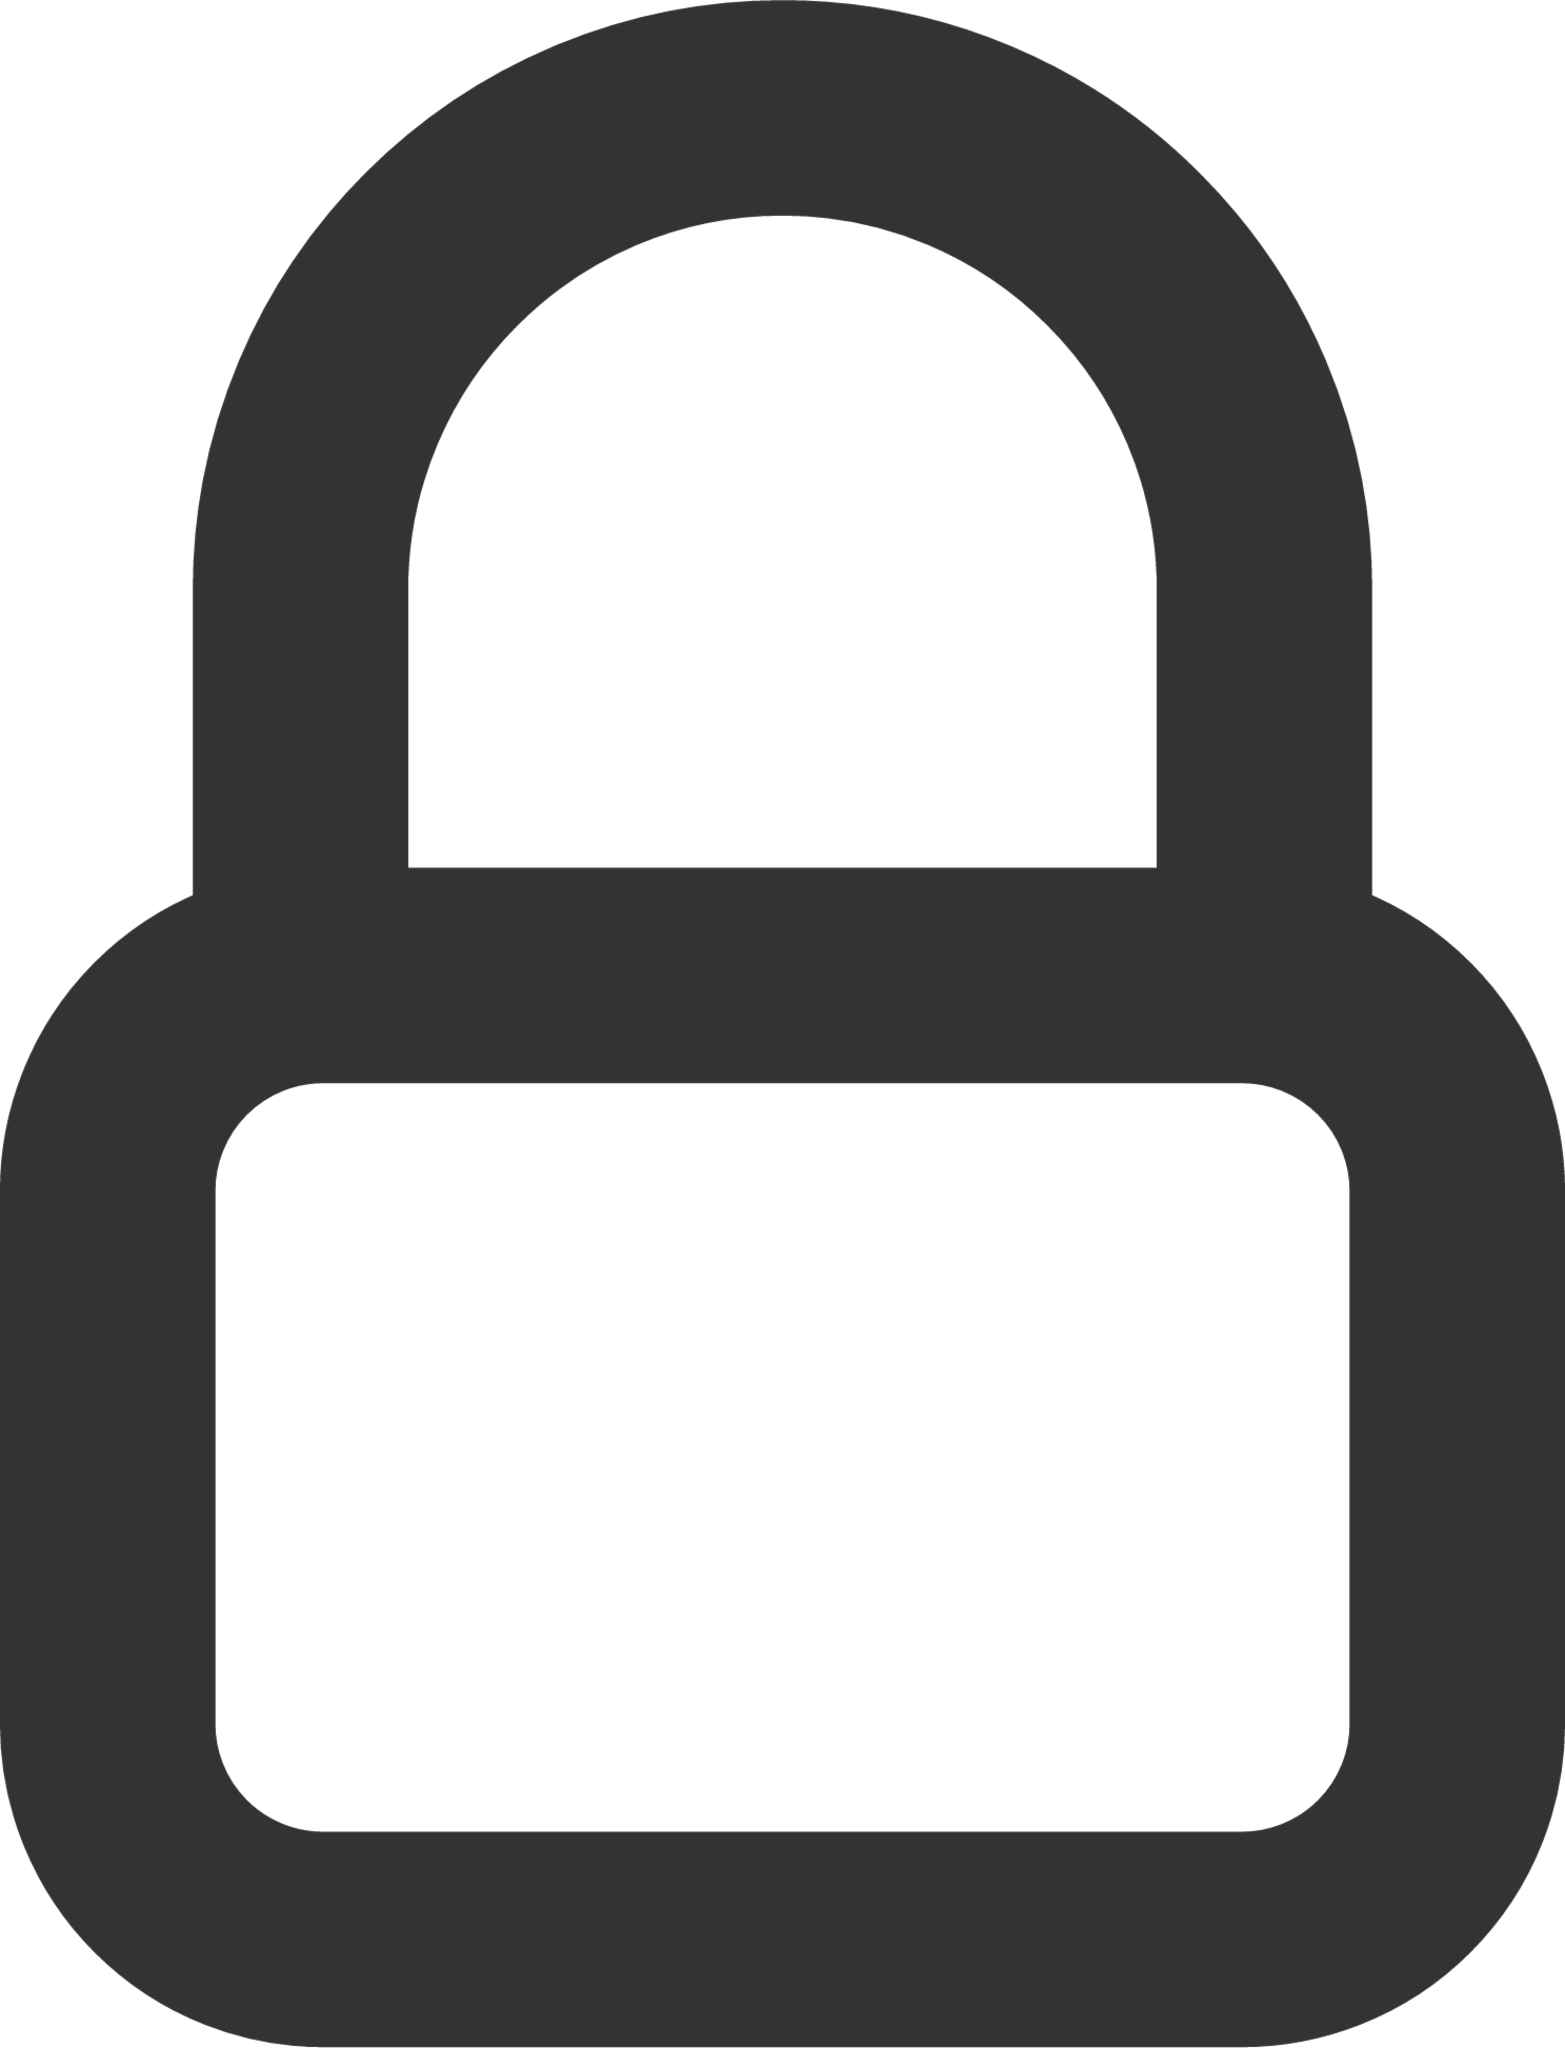 locked icon